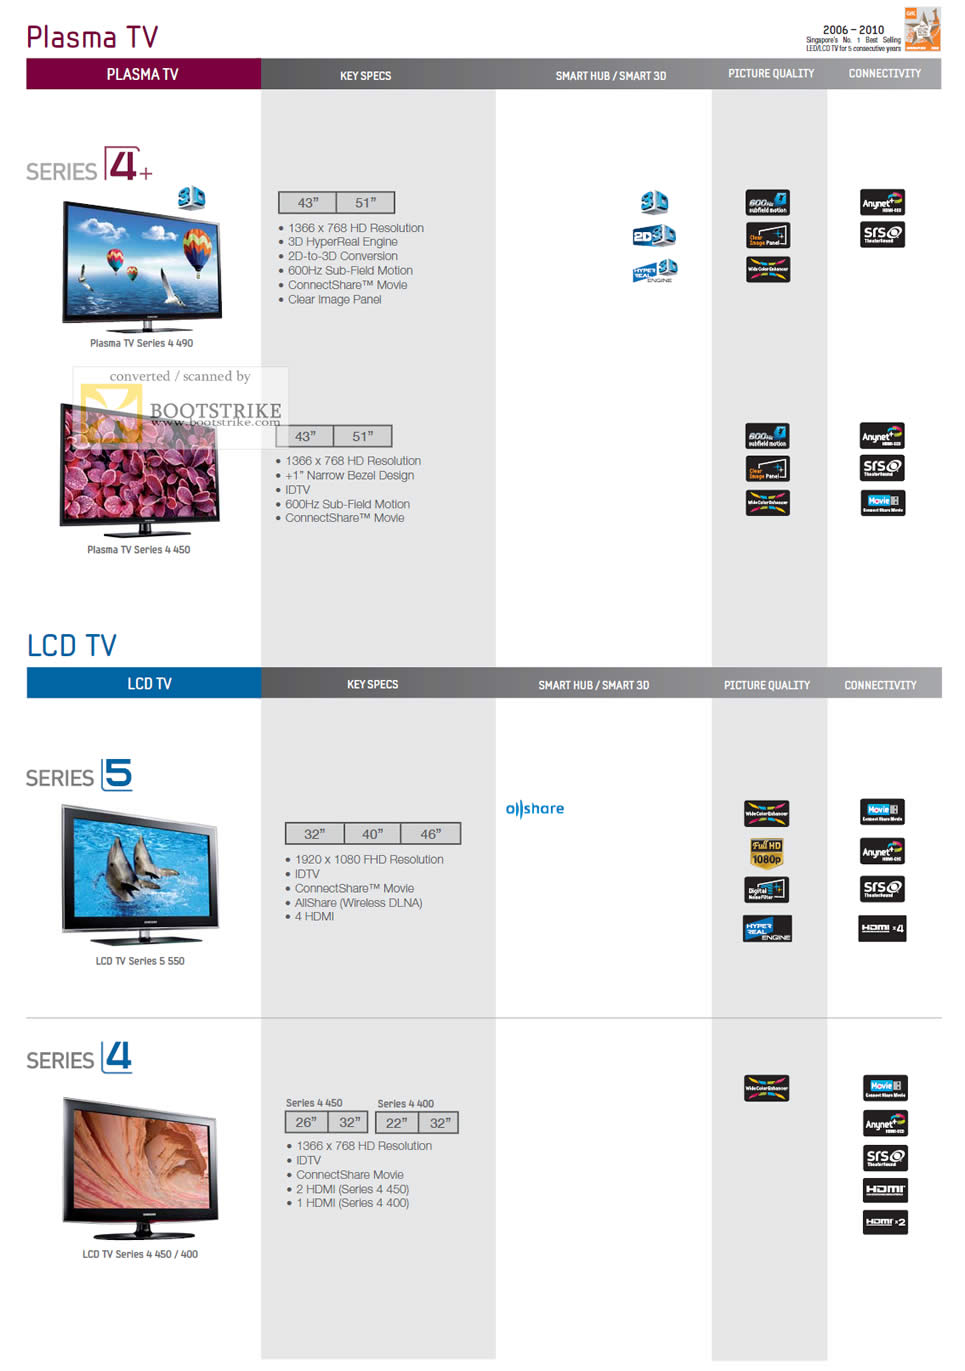 PC Show 2011 price list image brochure of Samsung Mega Discount Plasma TV Series 4 LCD TV Series 5 Series 4